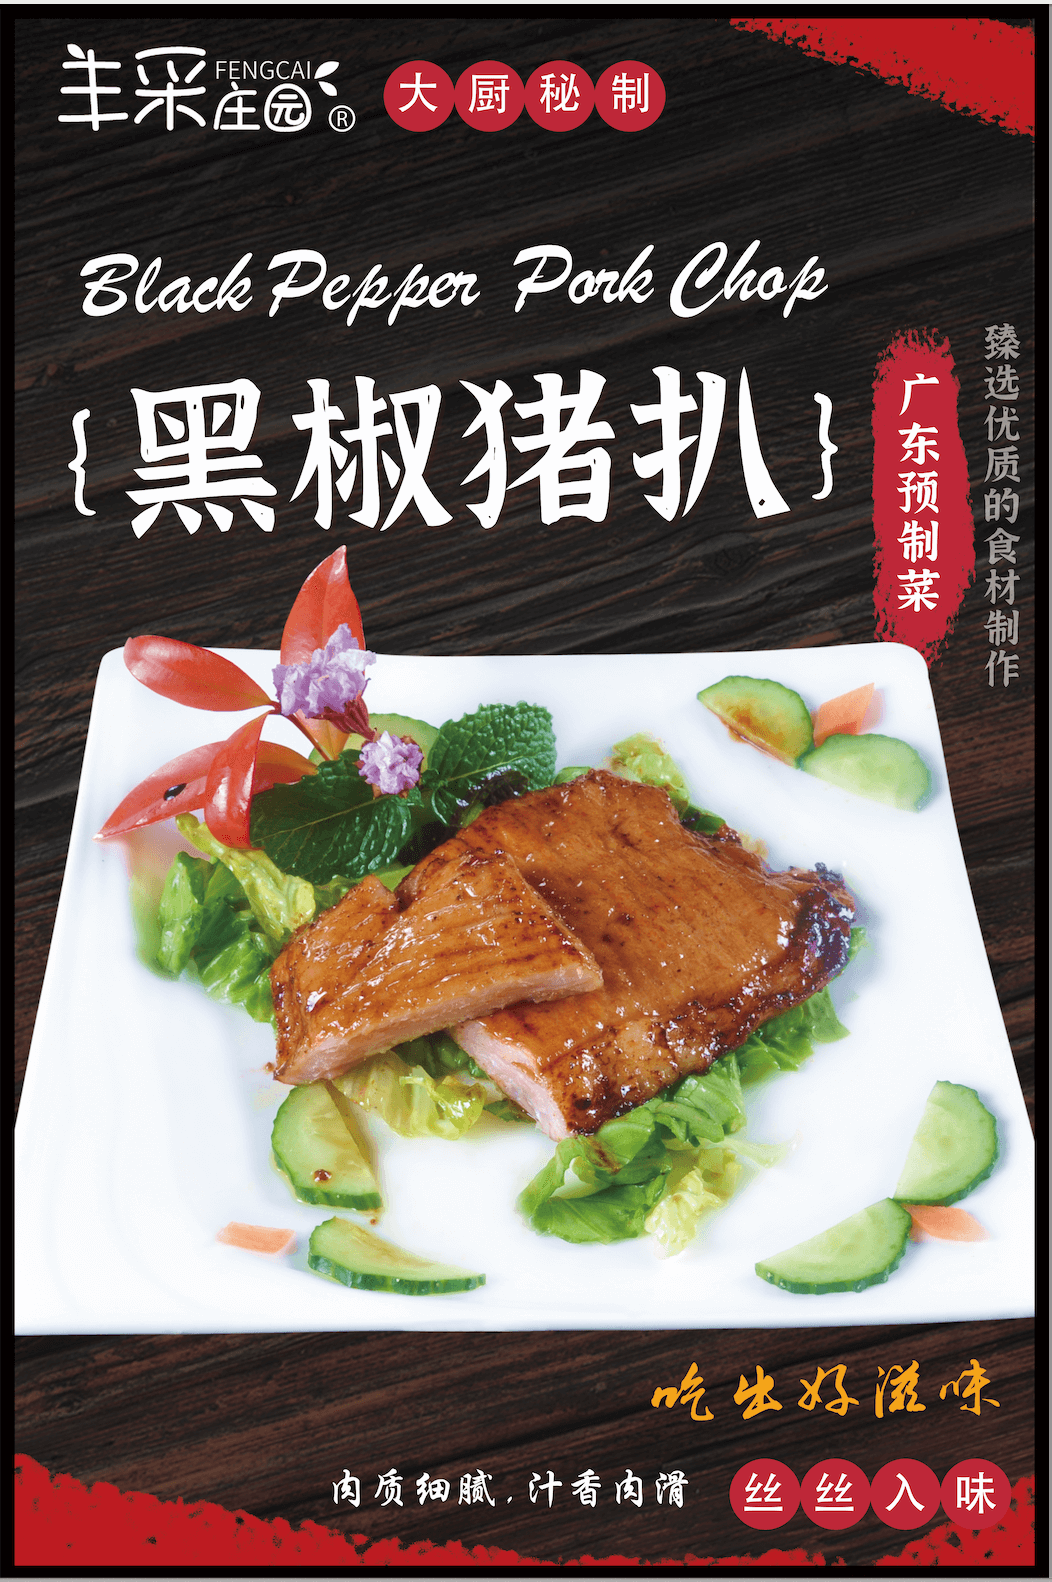 Black pepper pork chops